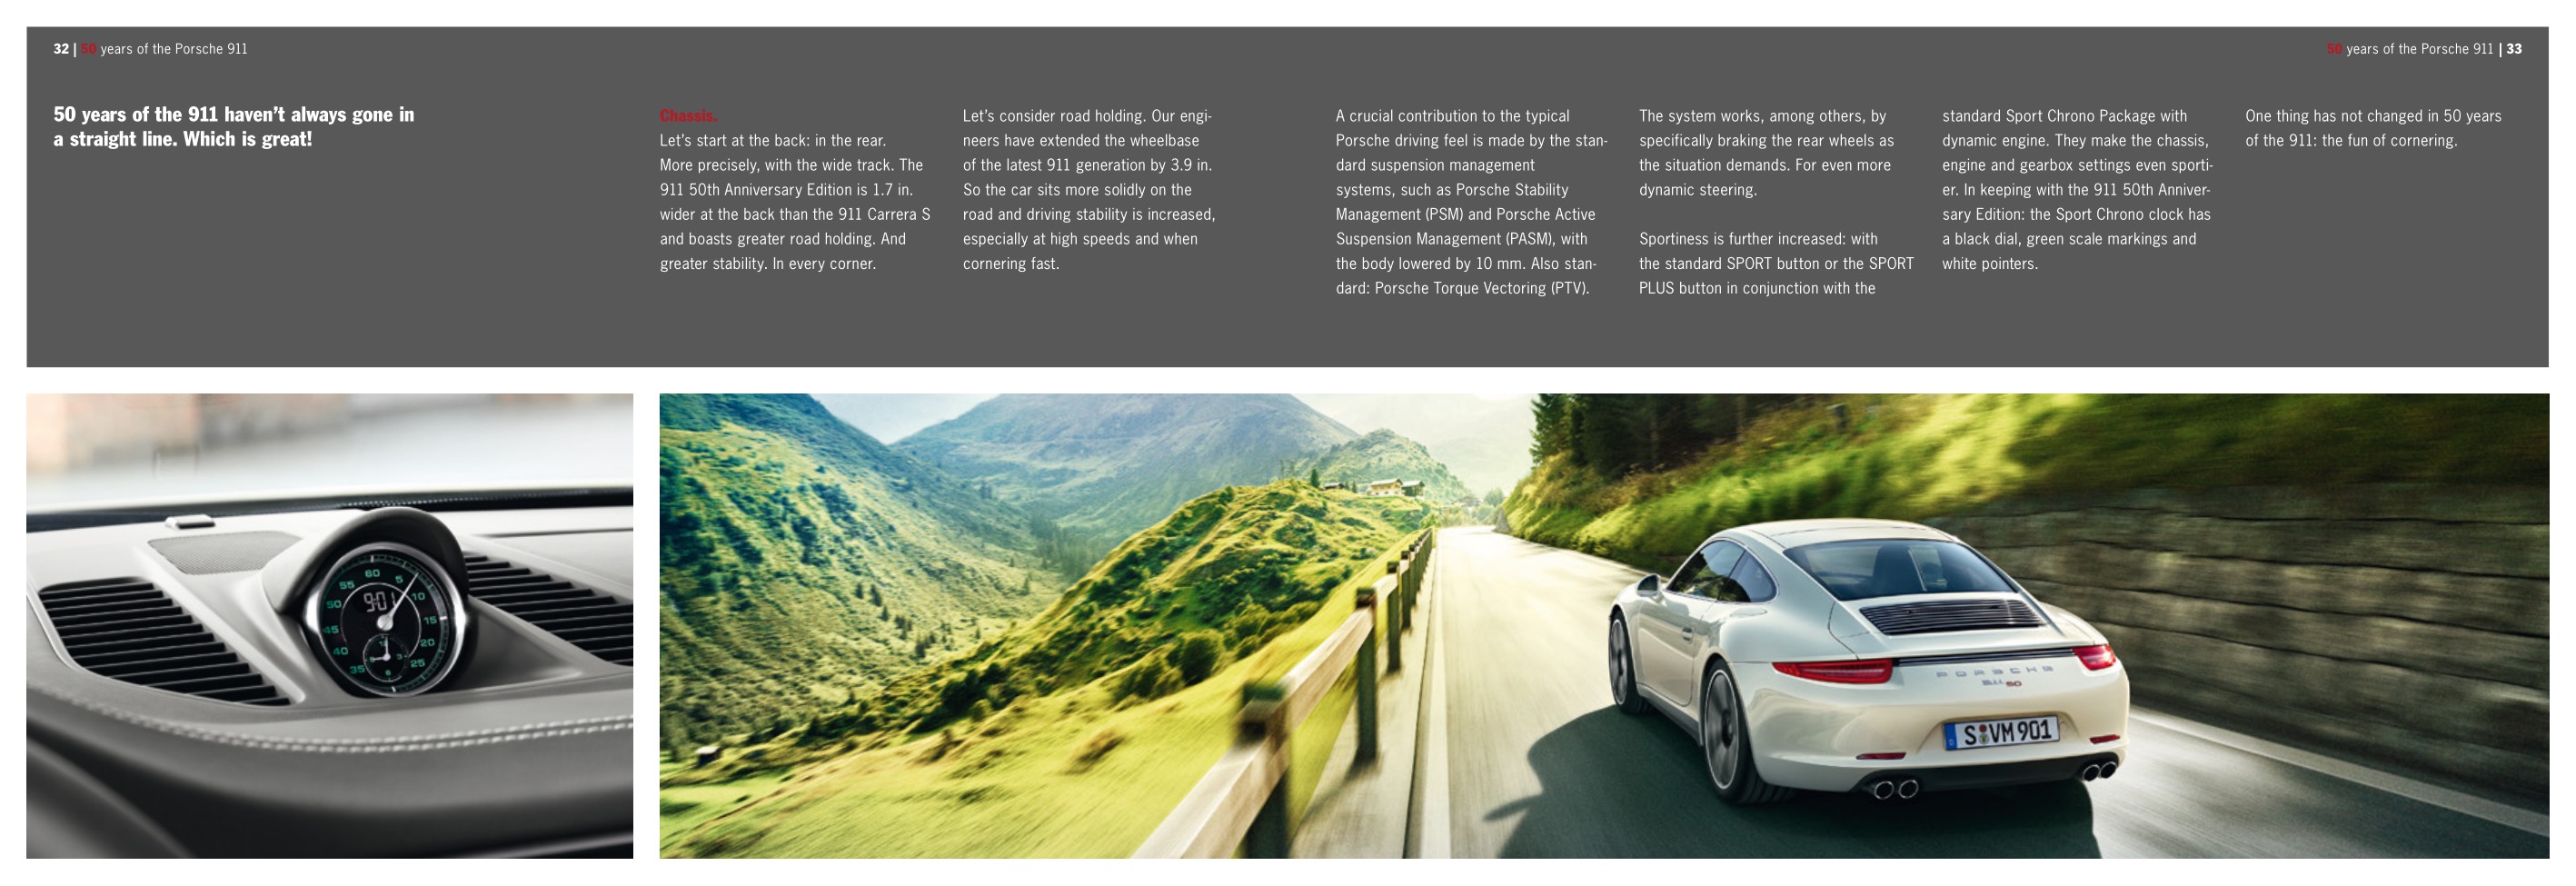 2014 Porsche 911 50 Brochure Page 15